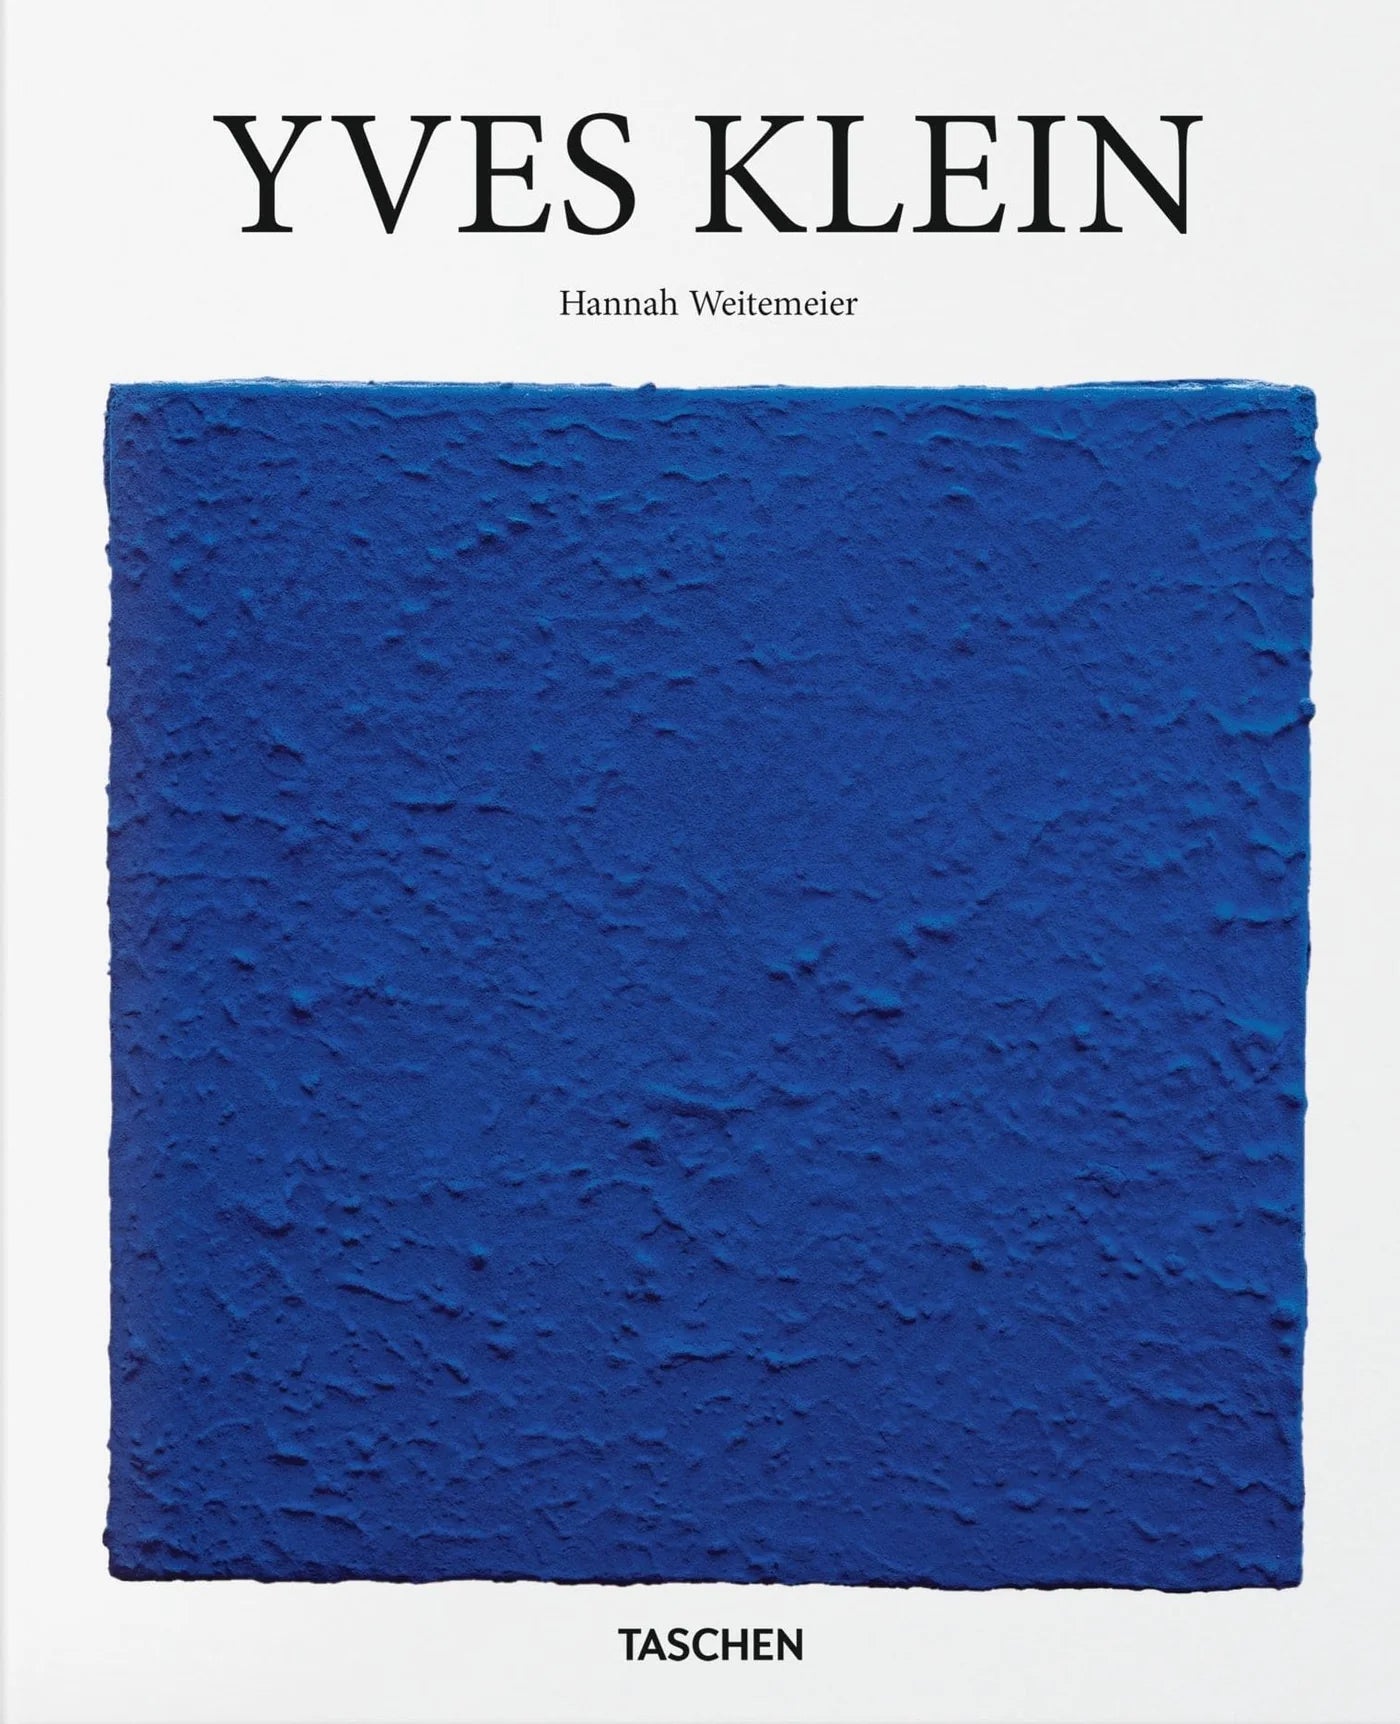 Yves Klein - Basic Art Series